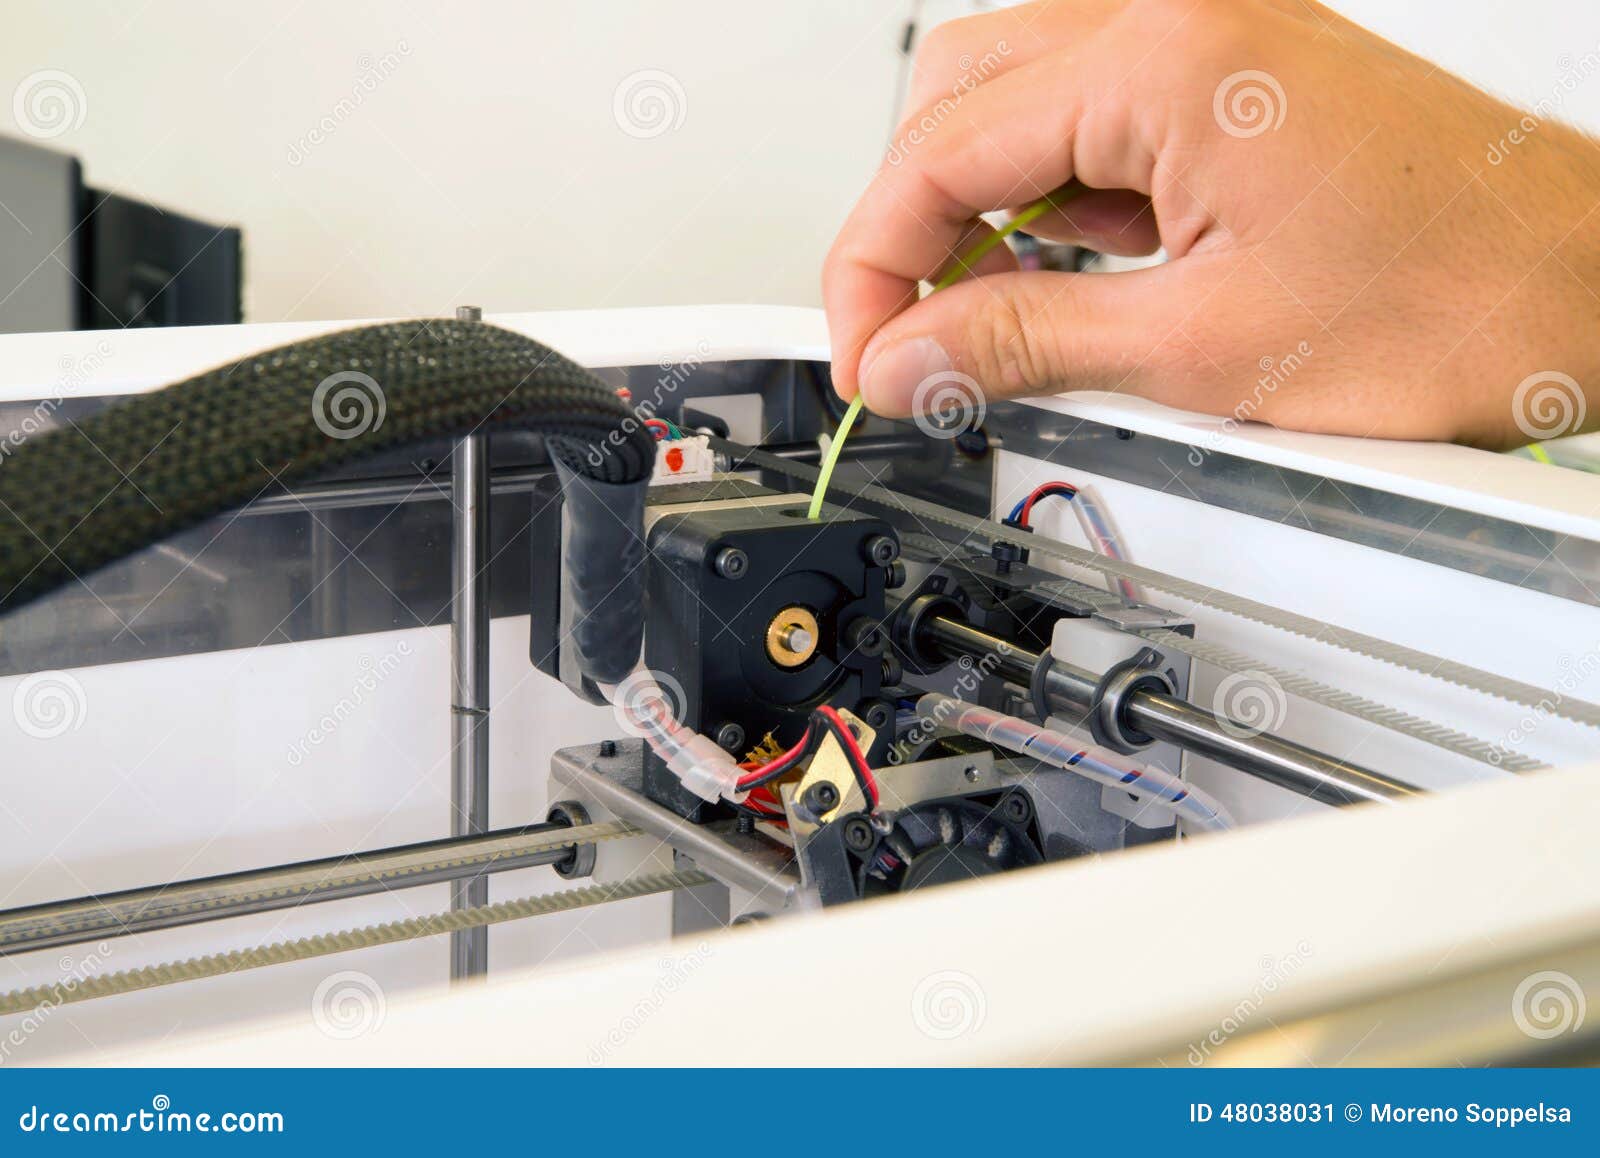 3d printer - fdm printing